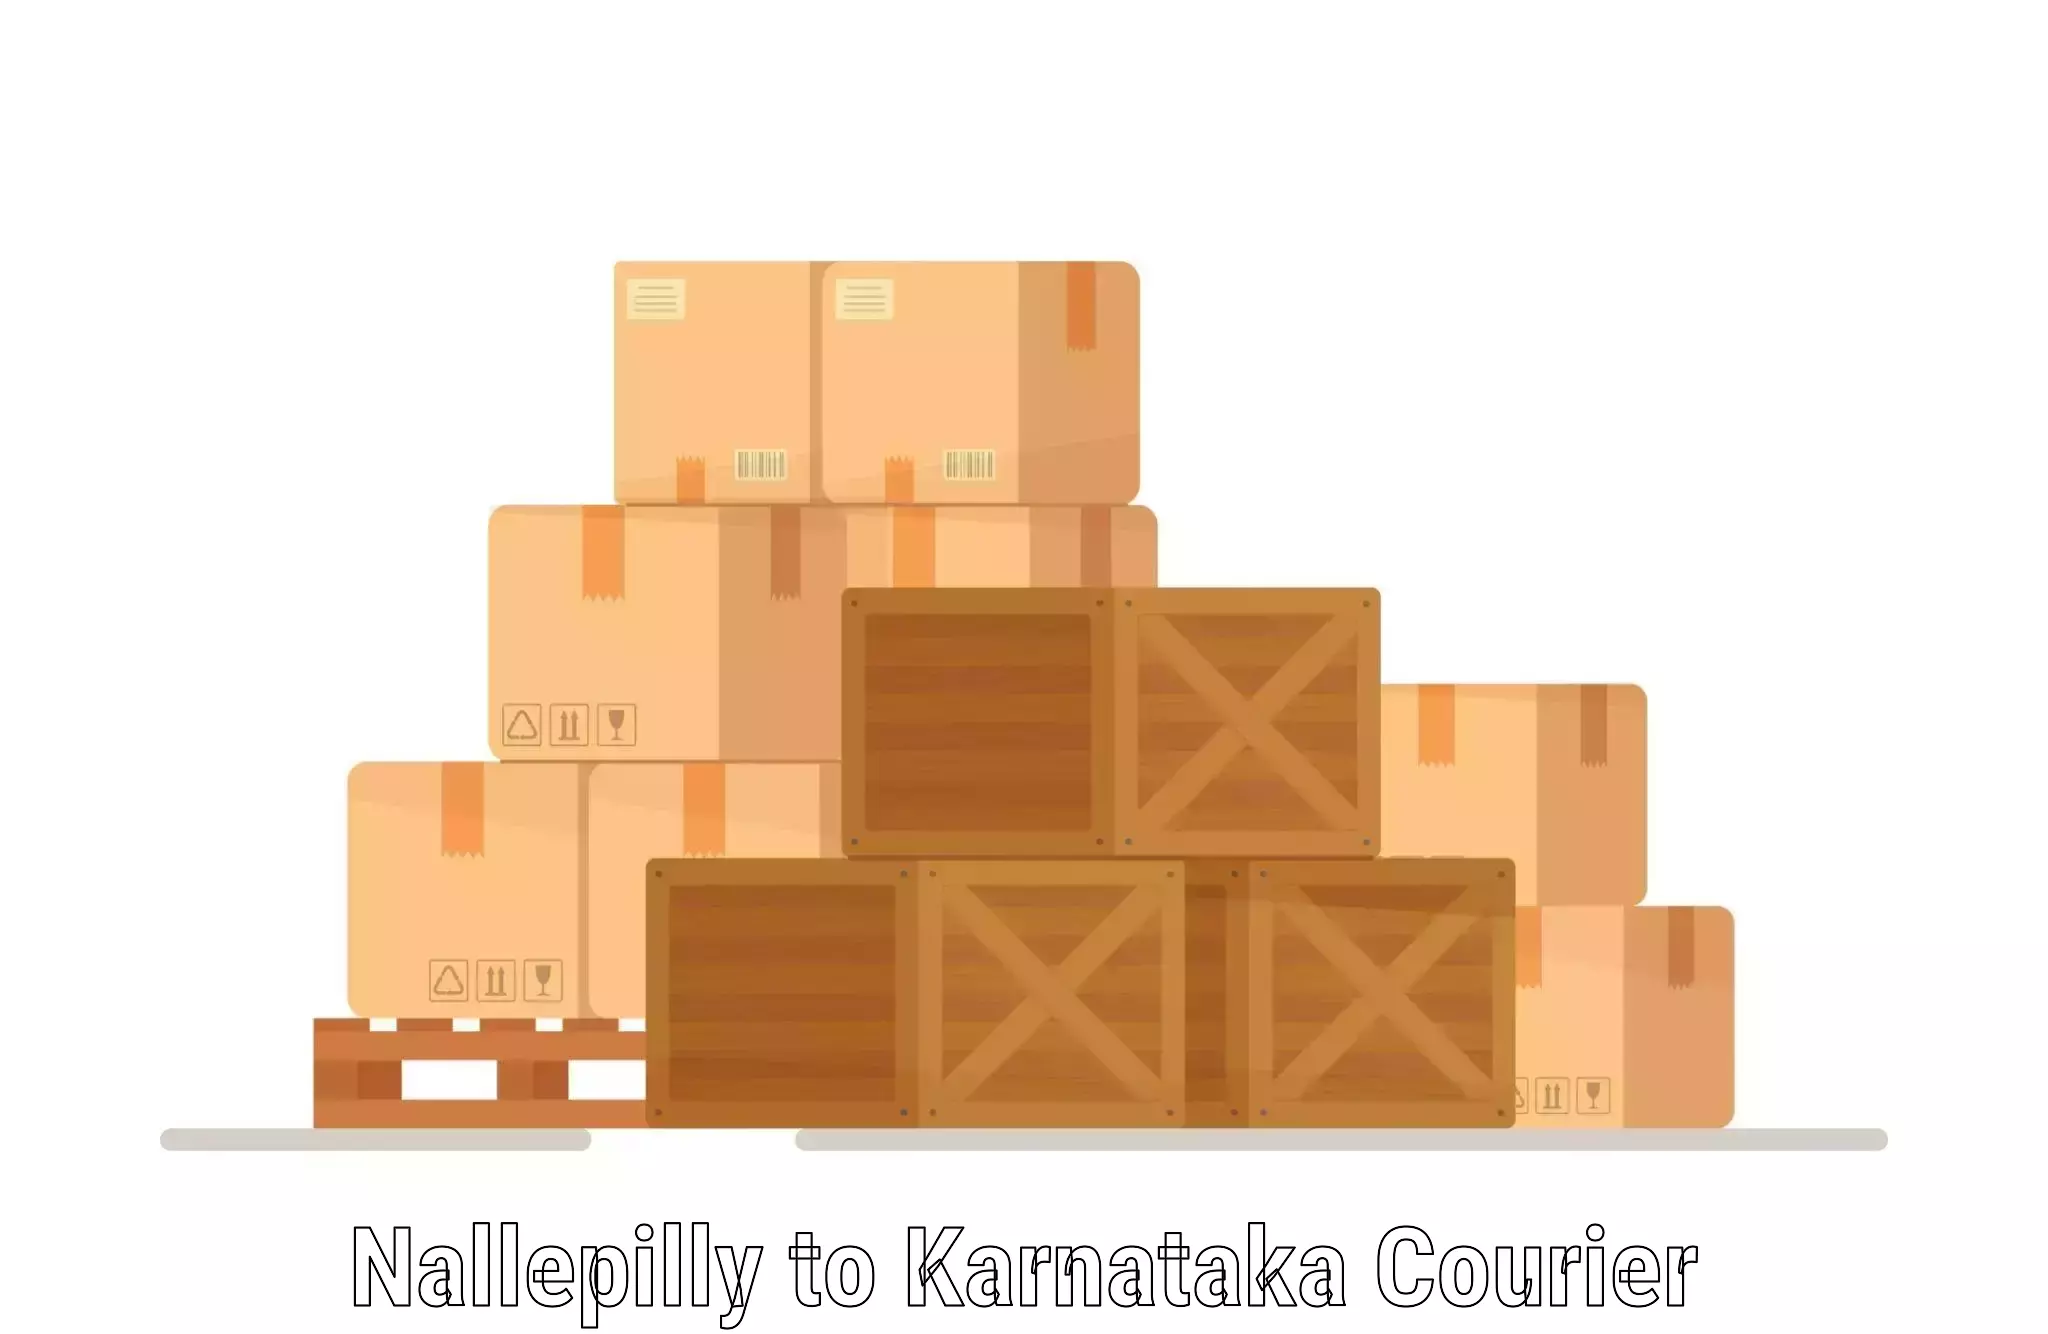 Express courier capabilities Nallepilly to Bengaluru